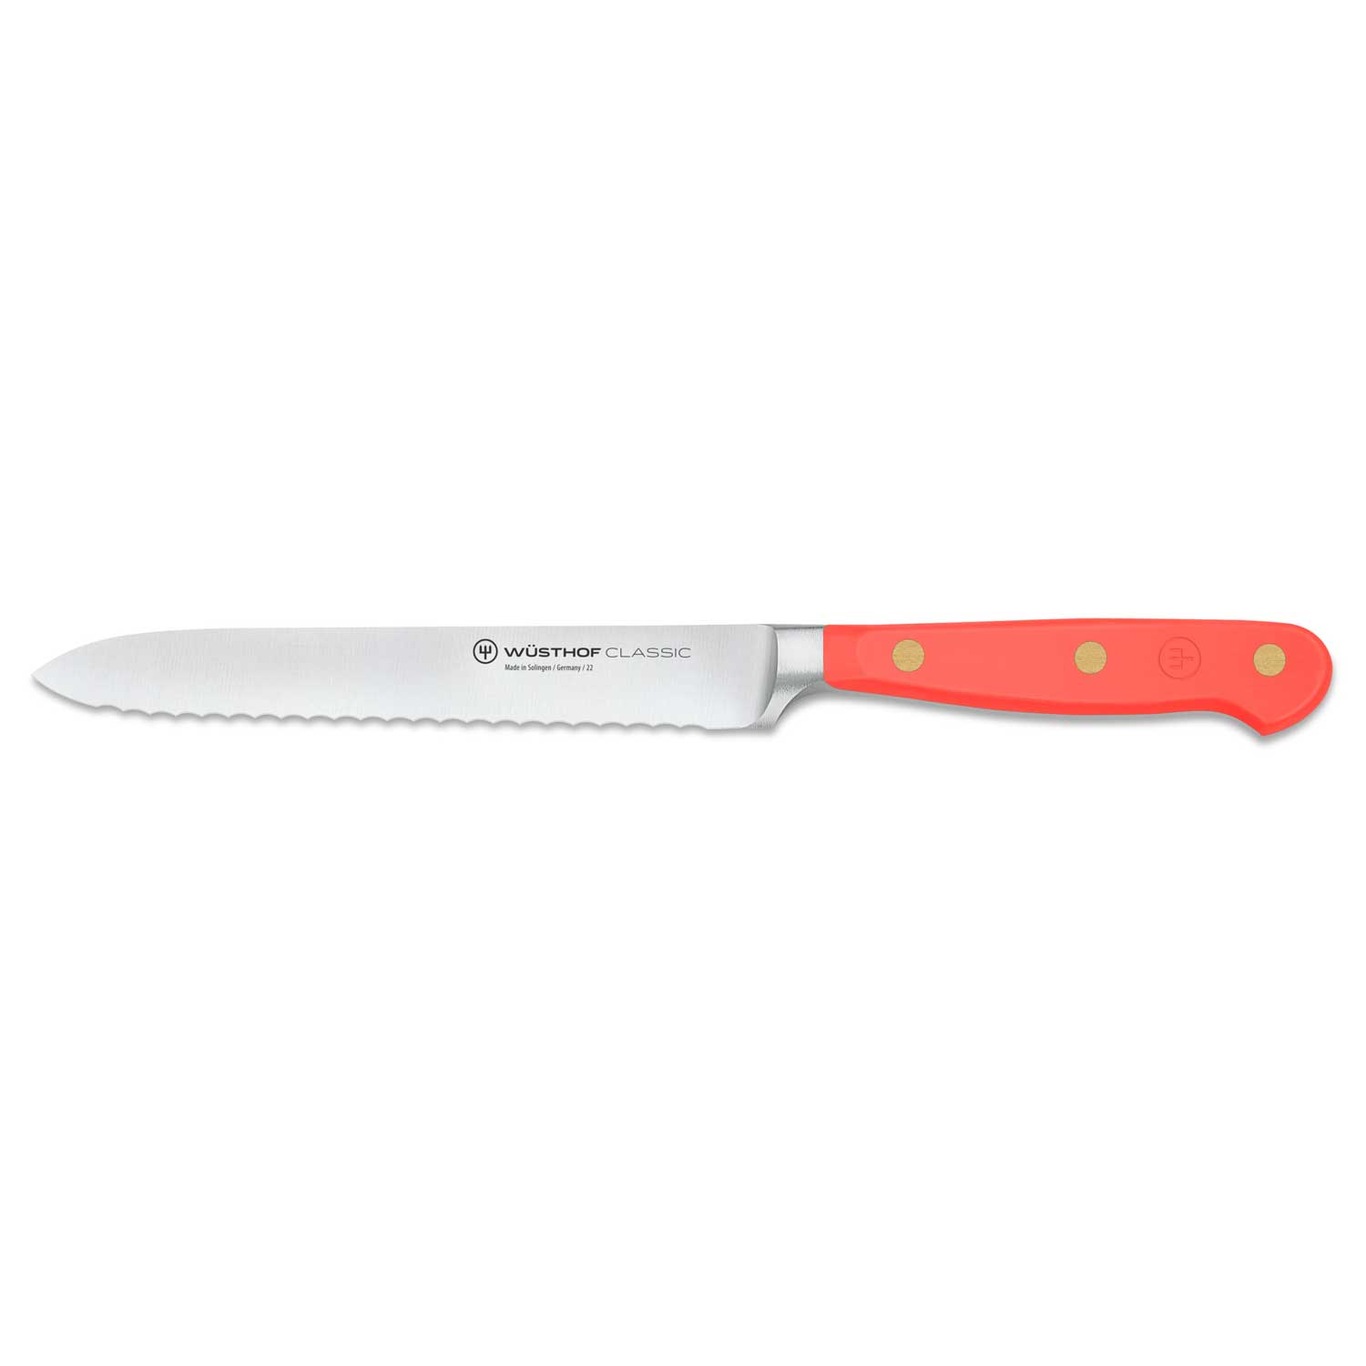 Classic Colour Serrated Utility Knife 14 cm, Coral Peach